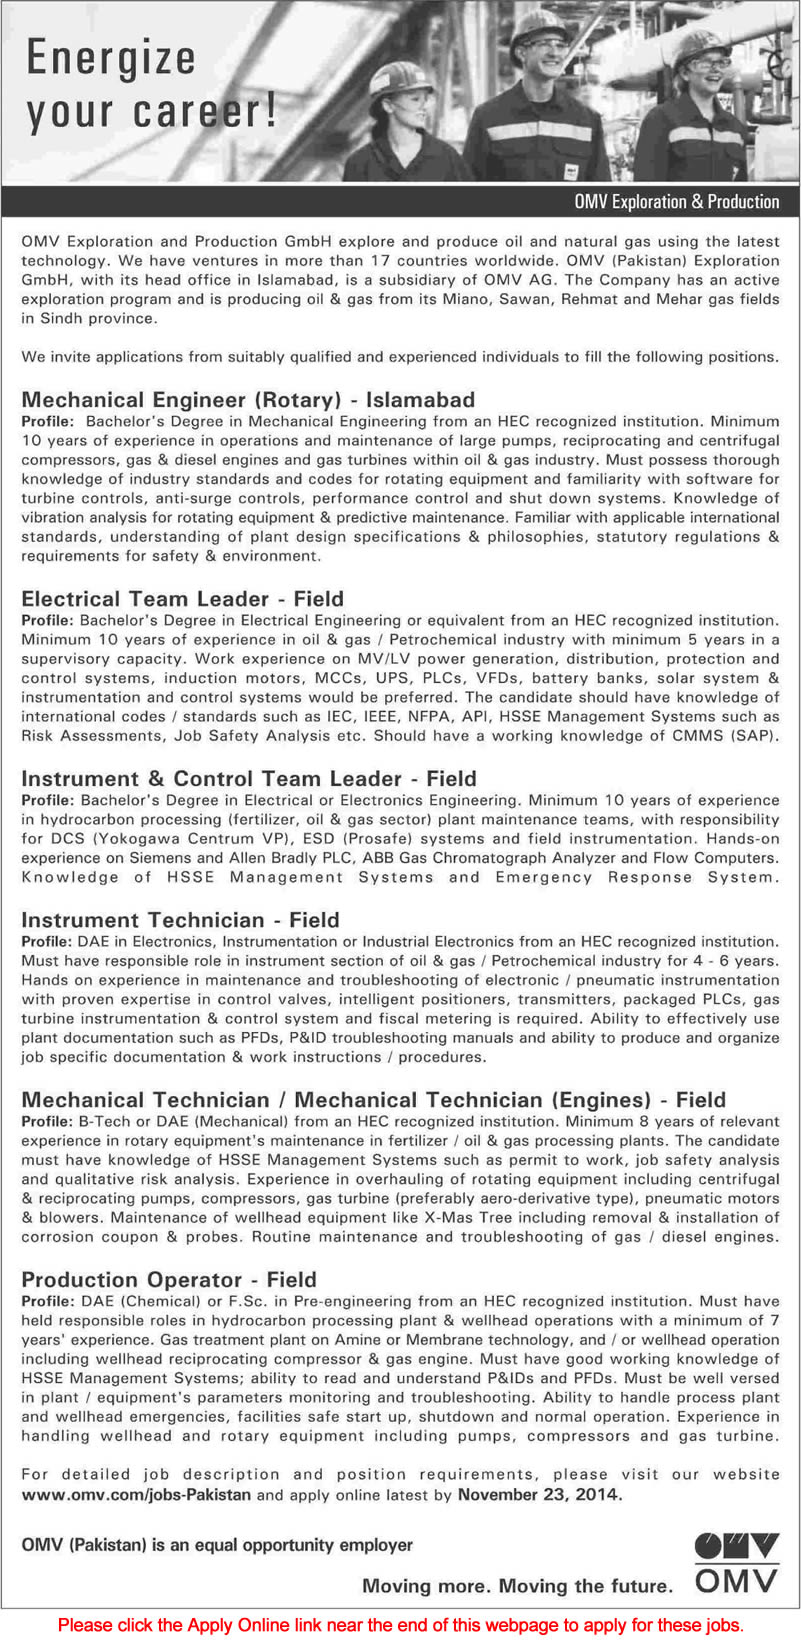 OMV Exploration & Production Pakistan Jobs 2014 November Apply Online Latest